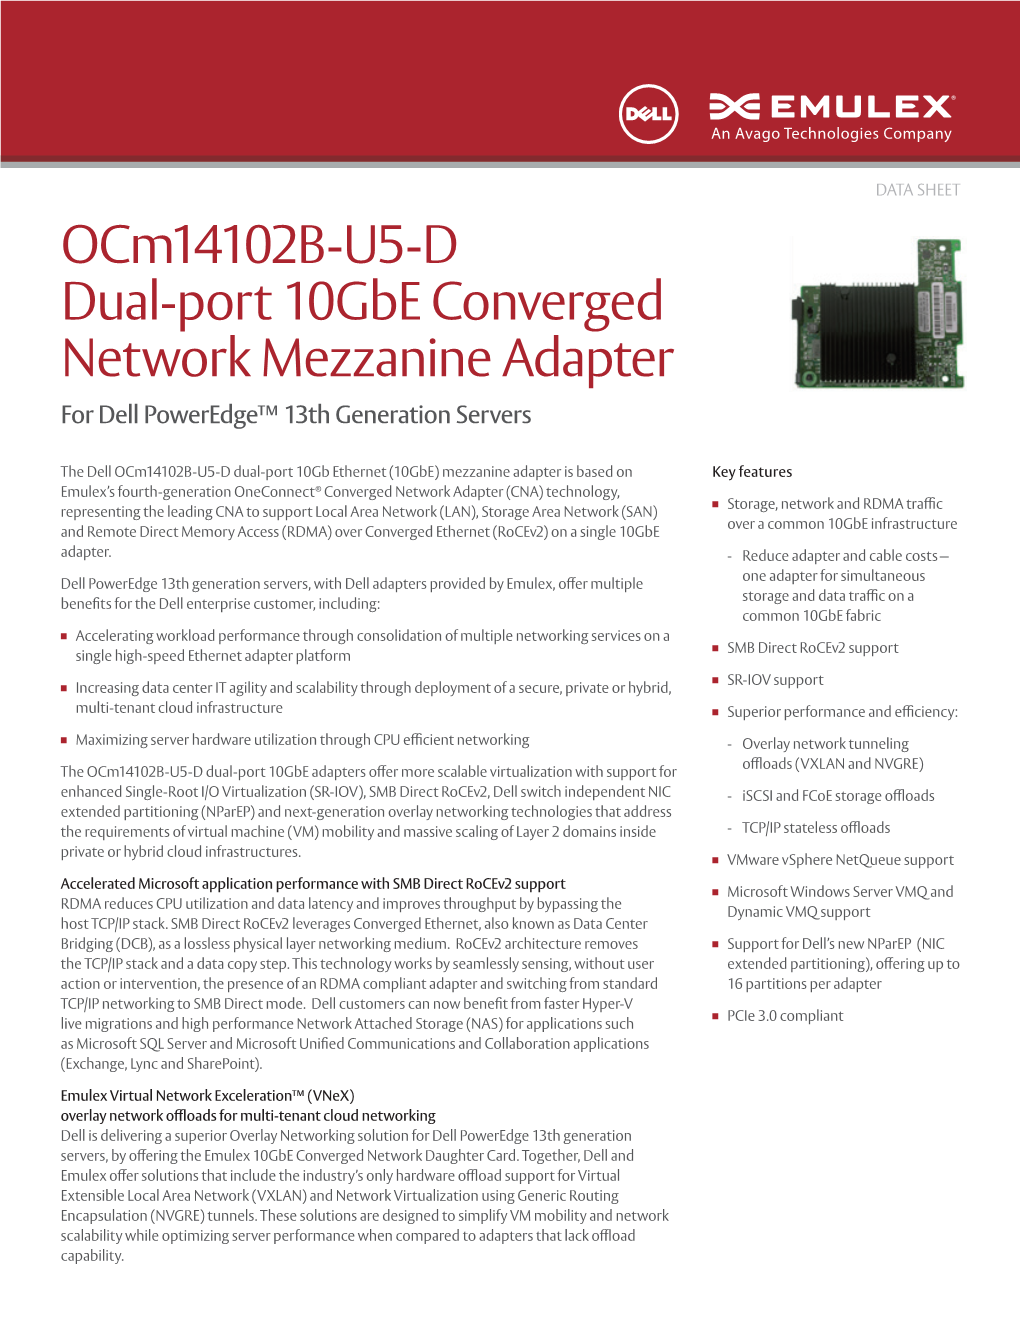 Ocm14102b-U5-D Dual-Port 10Gbe Converged Network Mezzanine Adapter for Dell Poweredge™ 13Th Generation Servers